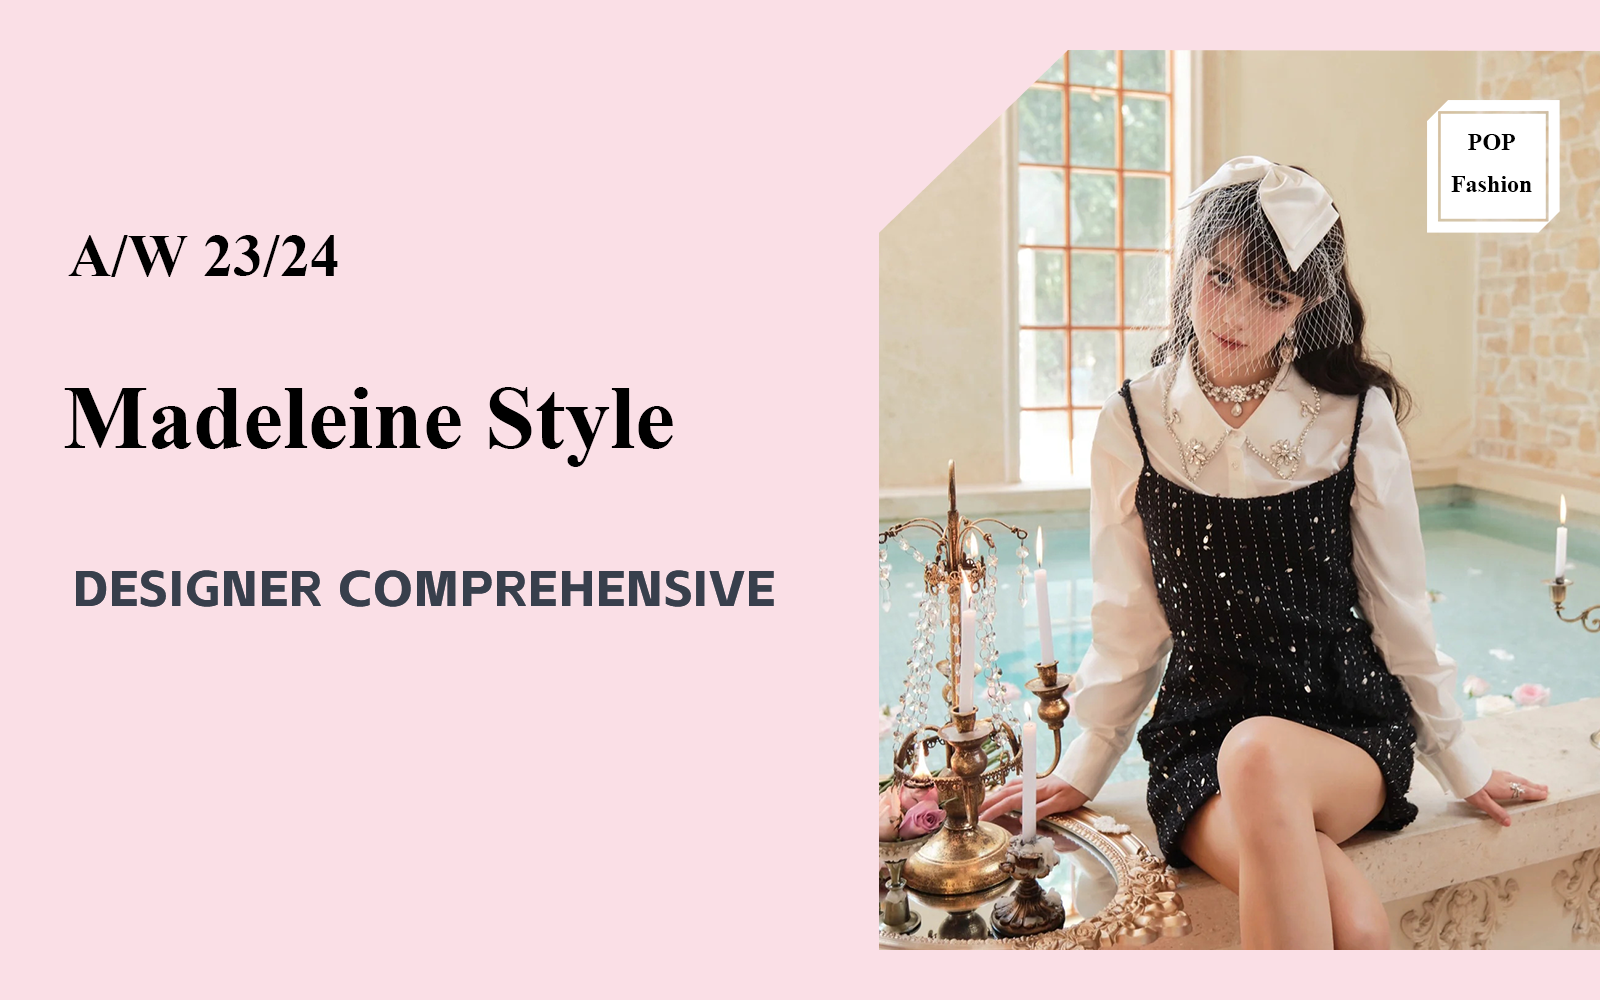 Madeleine Style -- The Comprehensive Analysis of Womenswear Designer Brand